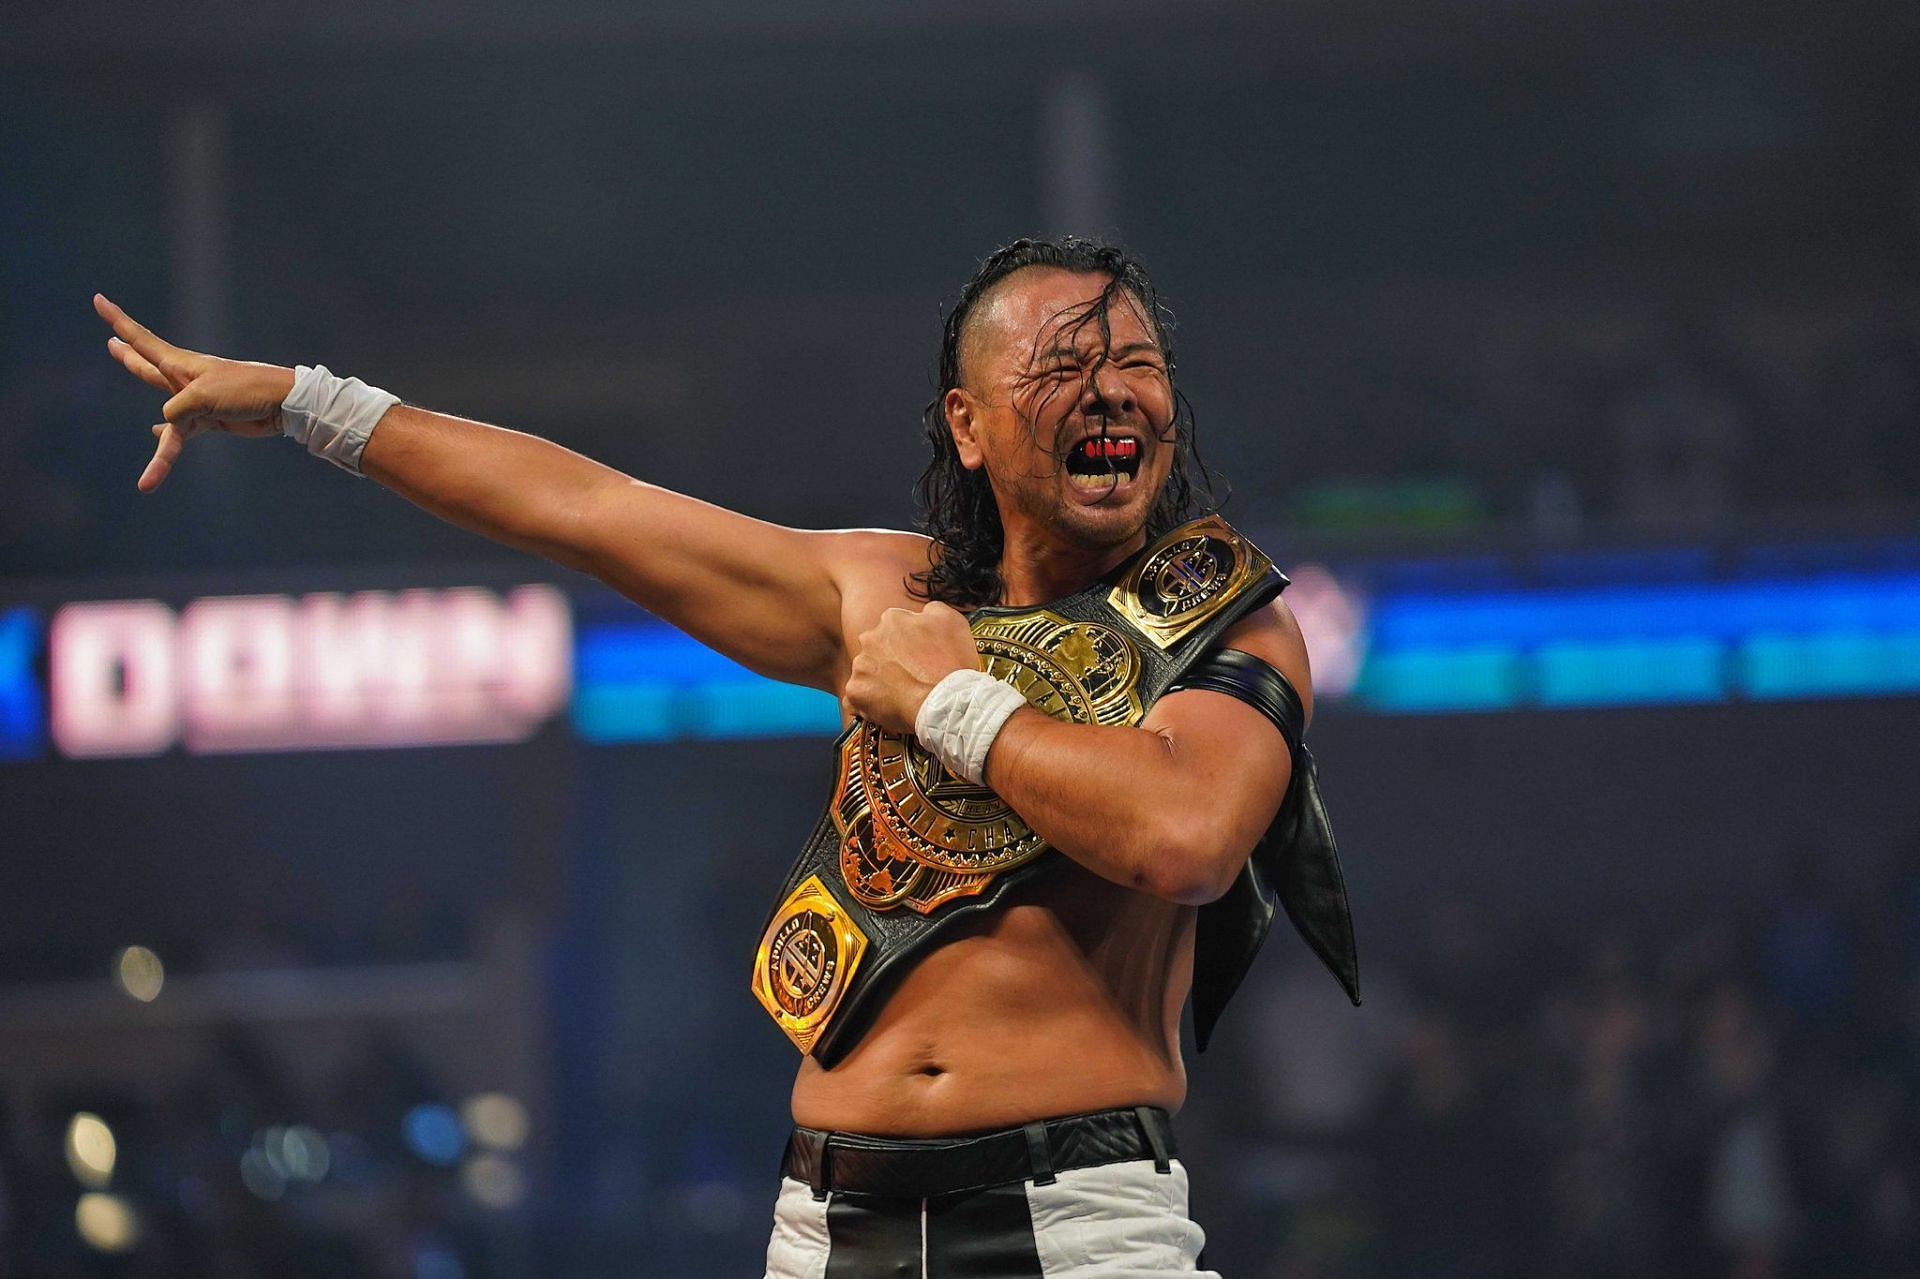 Shinsuke Nakamura is the current Intercontinental Champion